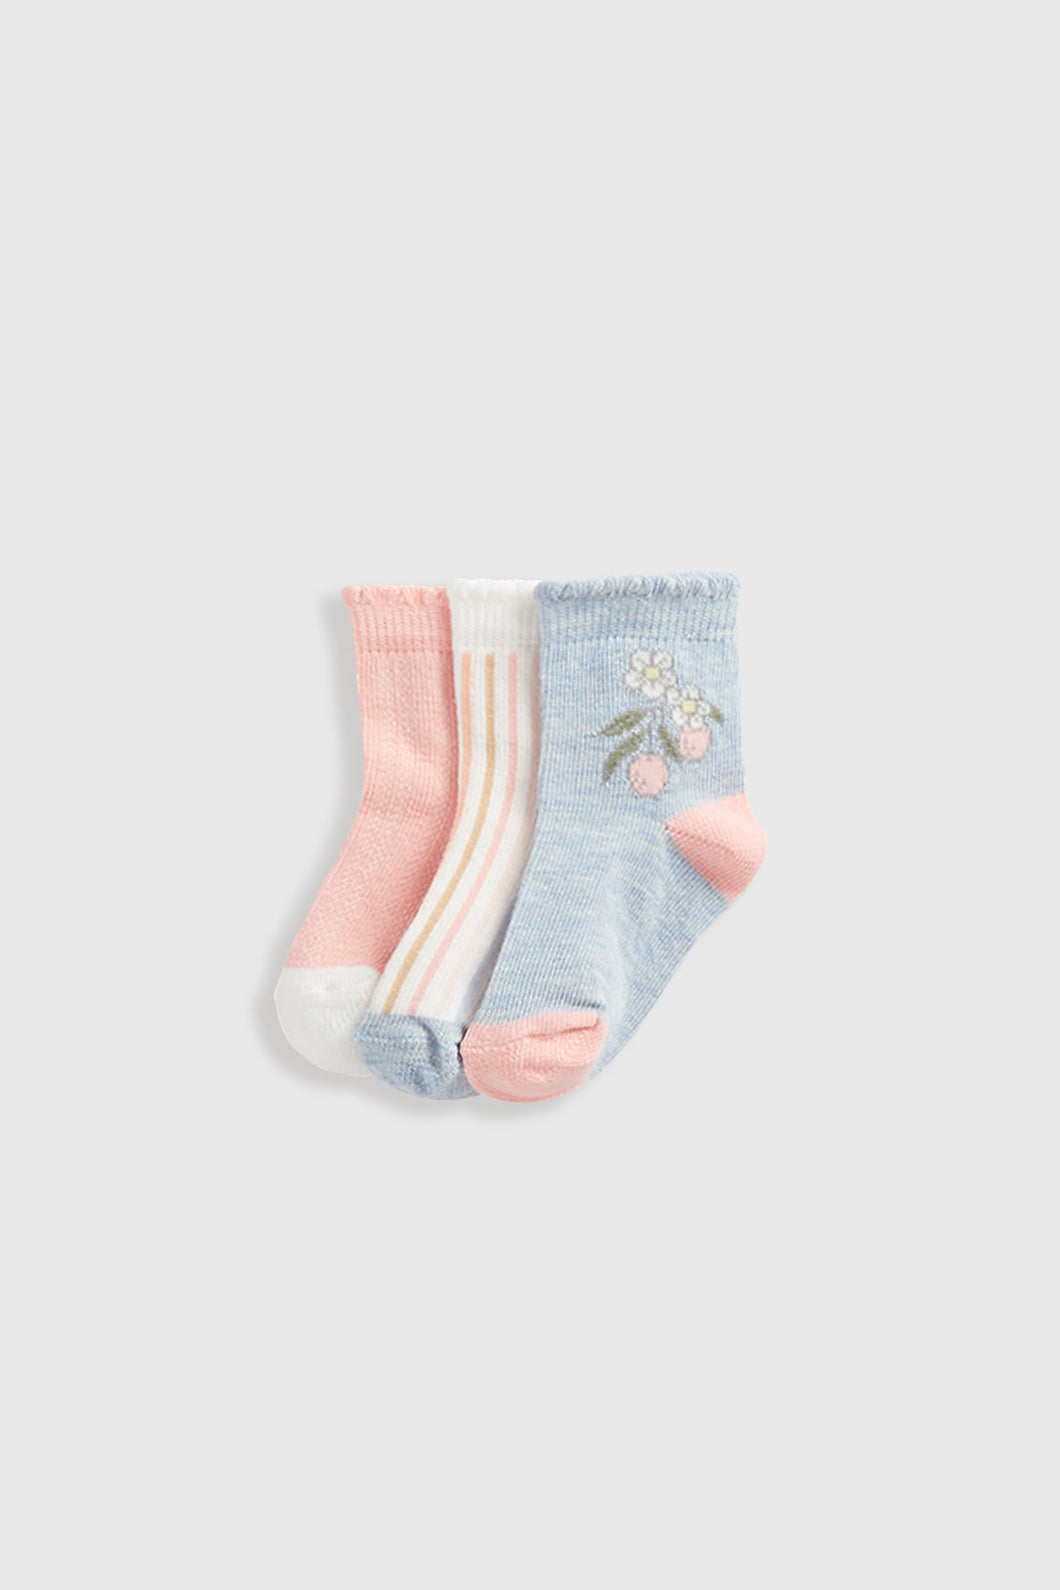 Mothercare Fruit Baby Socks - 3 Pack